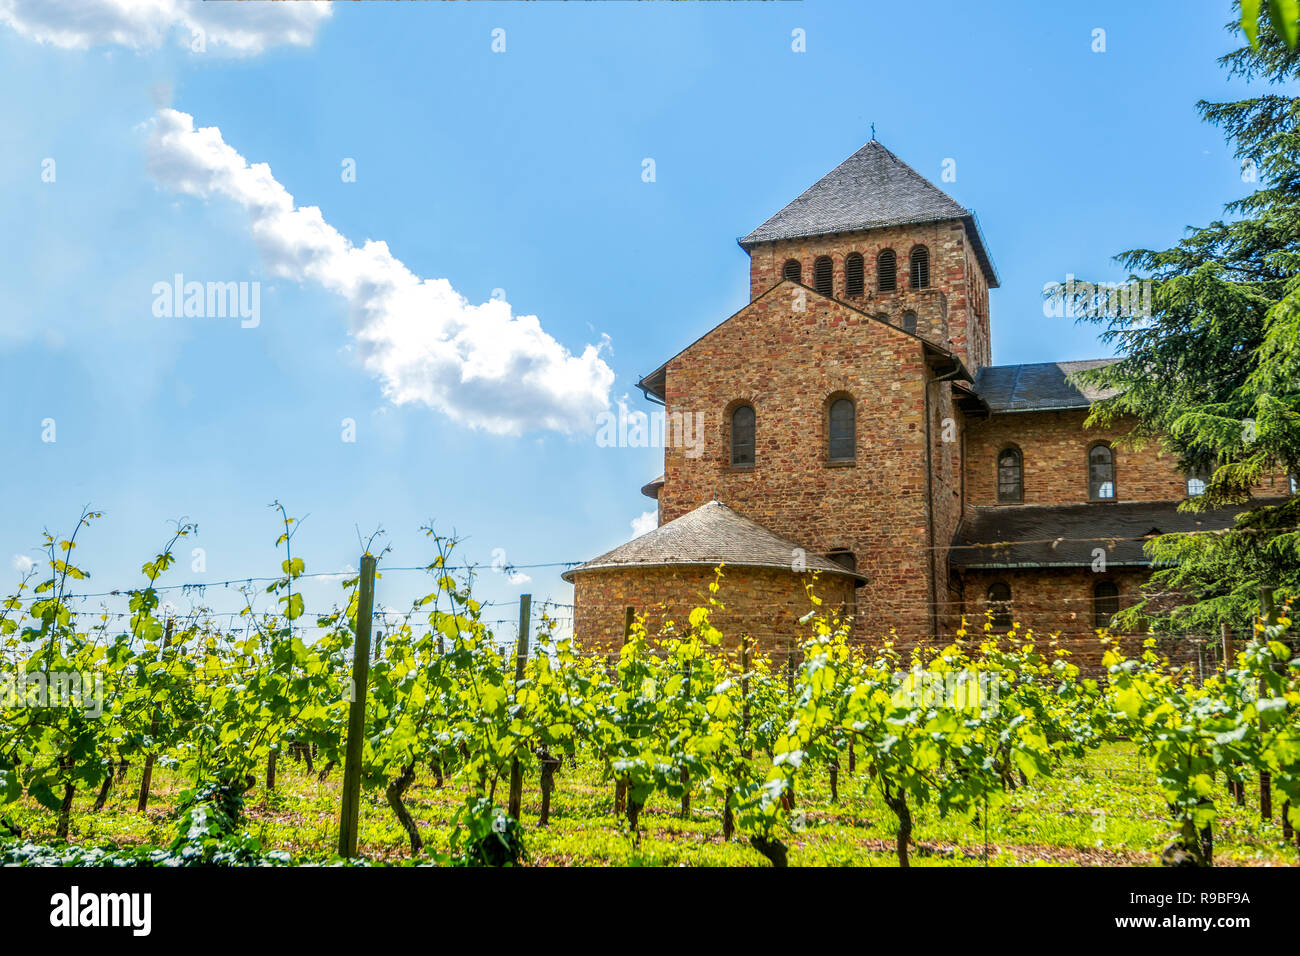 Castillo Johannisberg y viñedos, Rüdesheim, Alemania Foto de stock